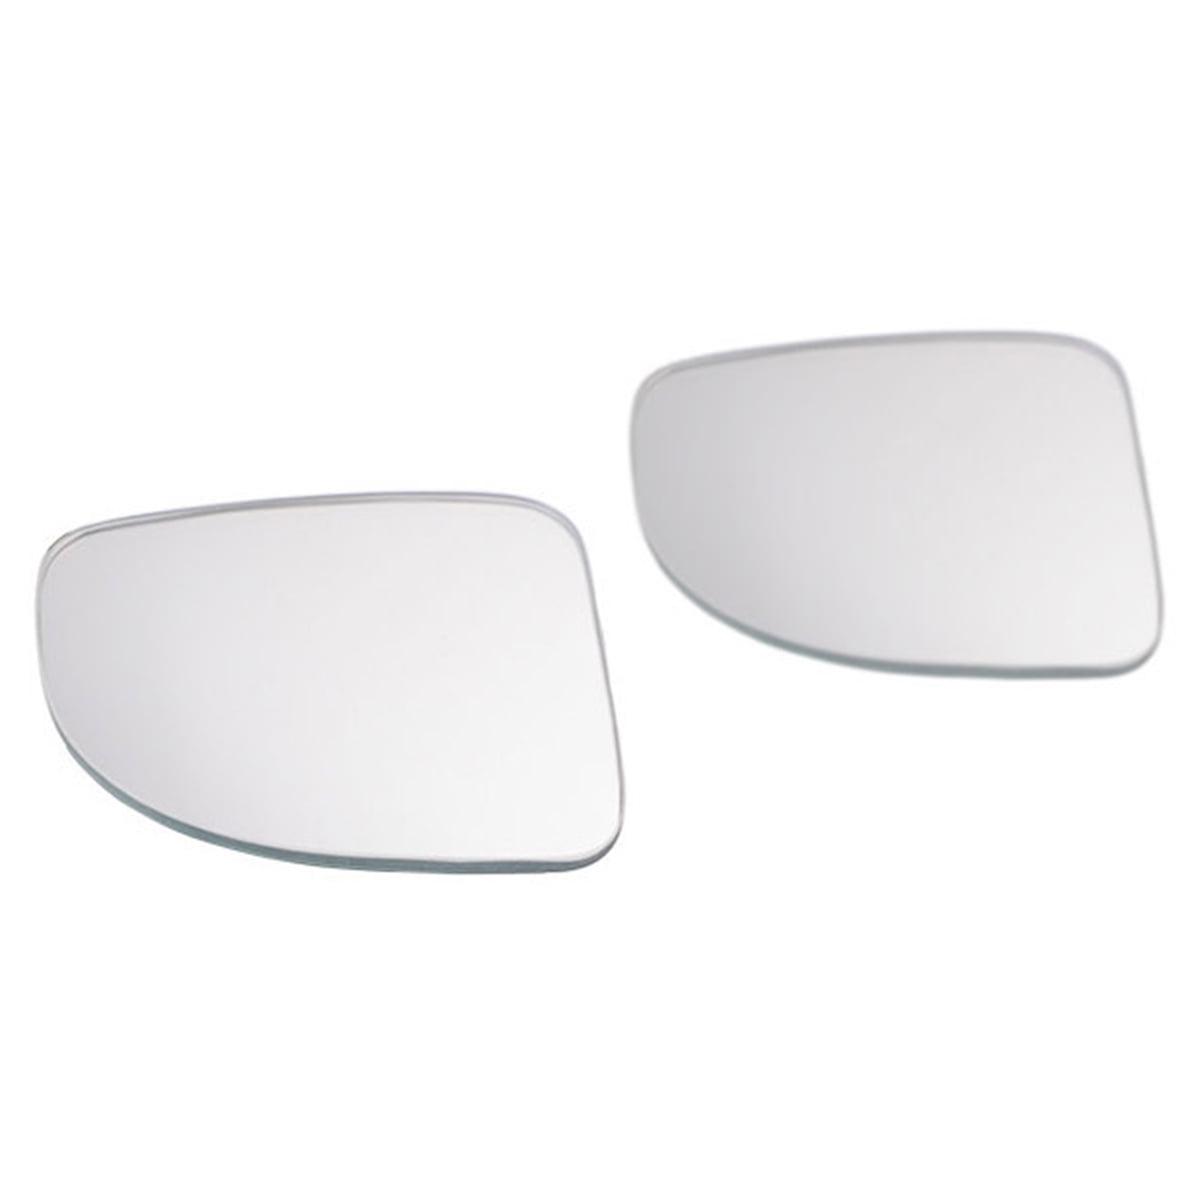 Glass Mount Rear View Mirror mounting kit 50-7302023